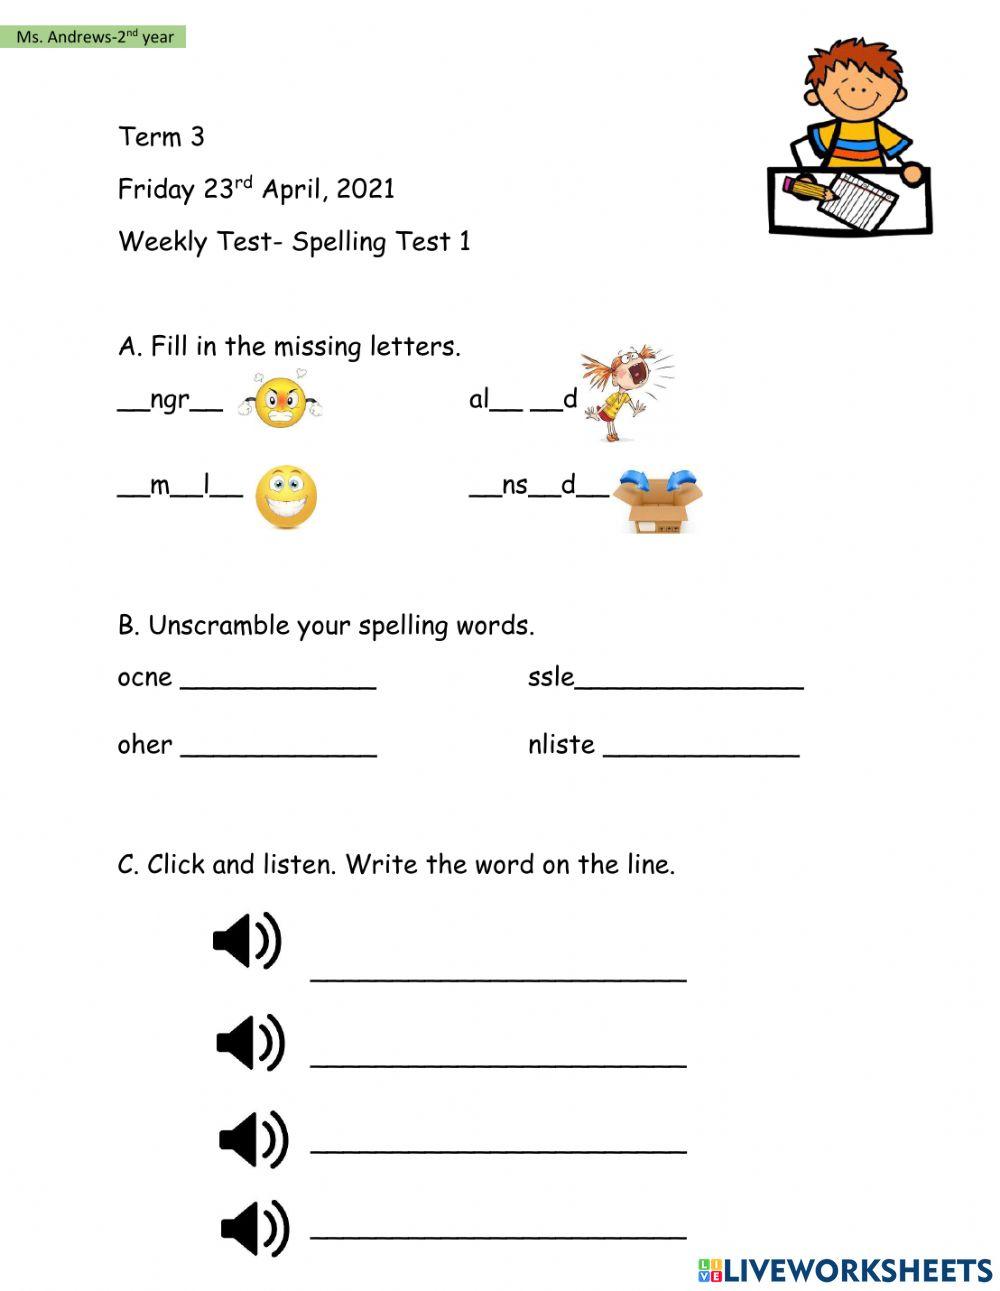 Term 3- Spelling Test 1